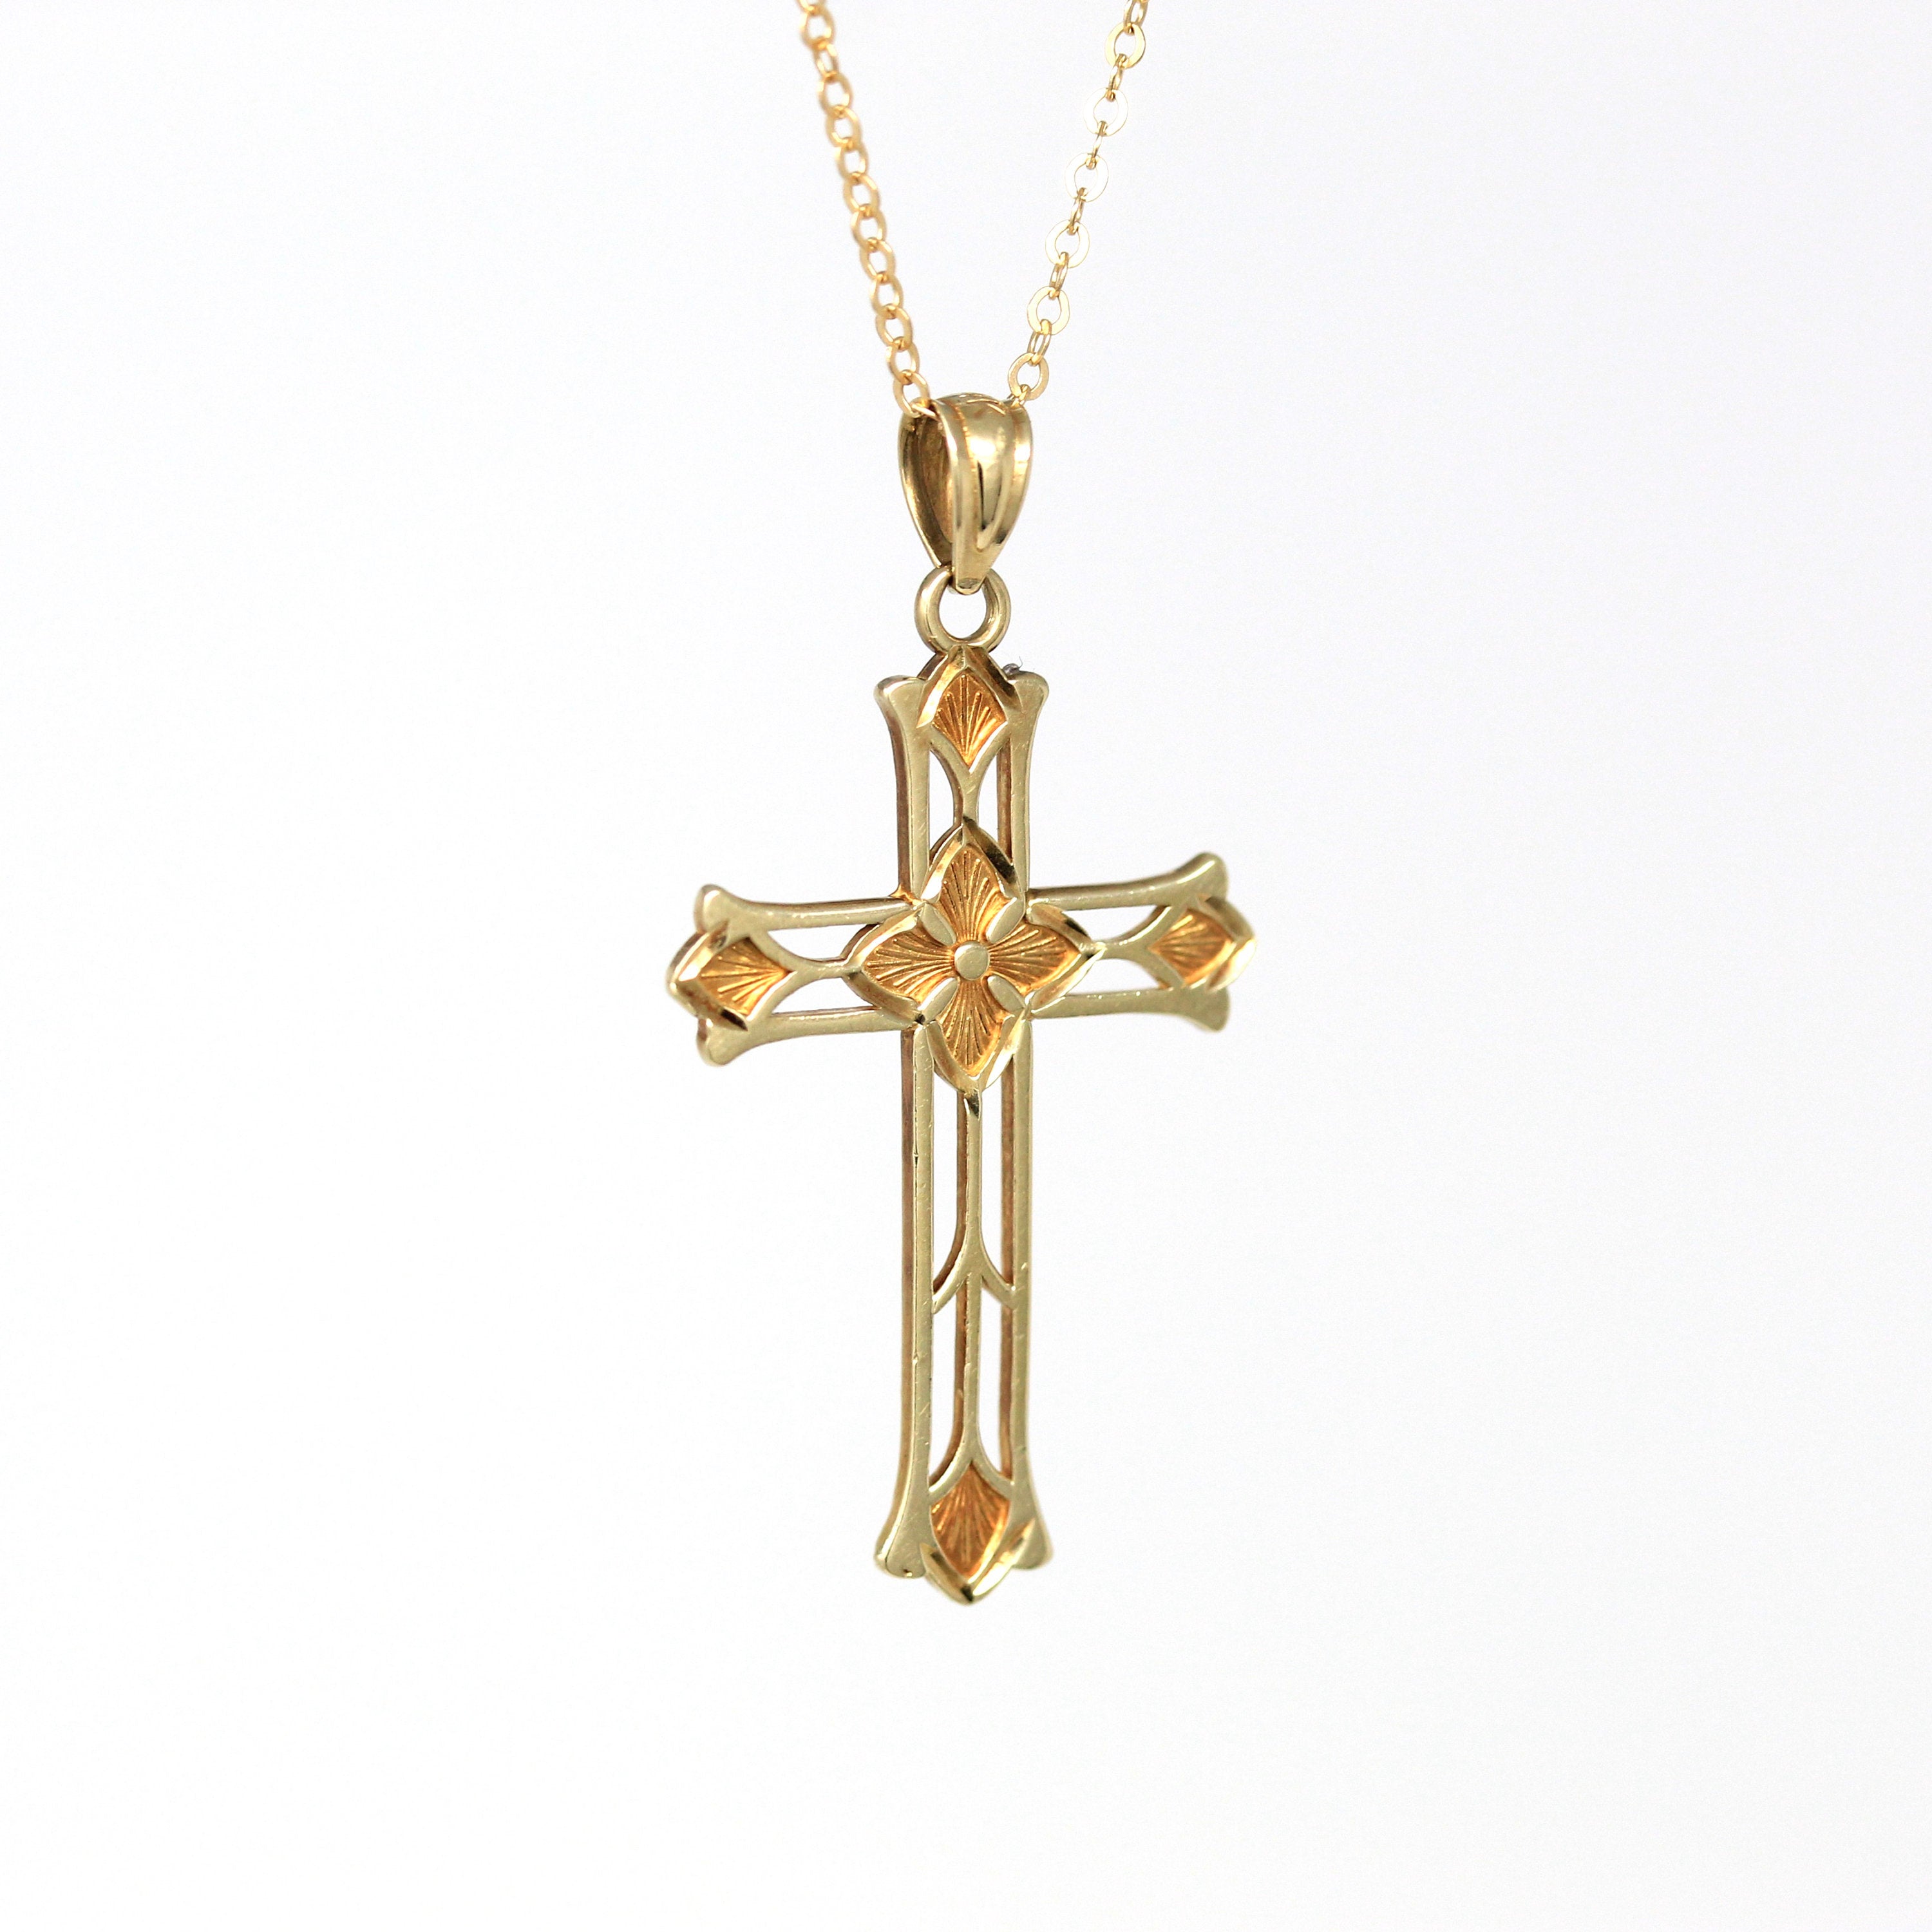 Sale - Vintage Cross Pendant - Retro 14k Yellow Gold Flower Necklace Charm  - Circa 1960s Era Religious Faith Fine Crucifix Statement Jewelry